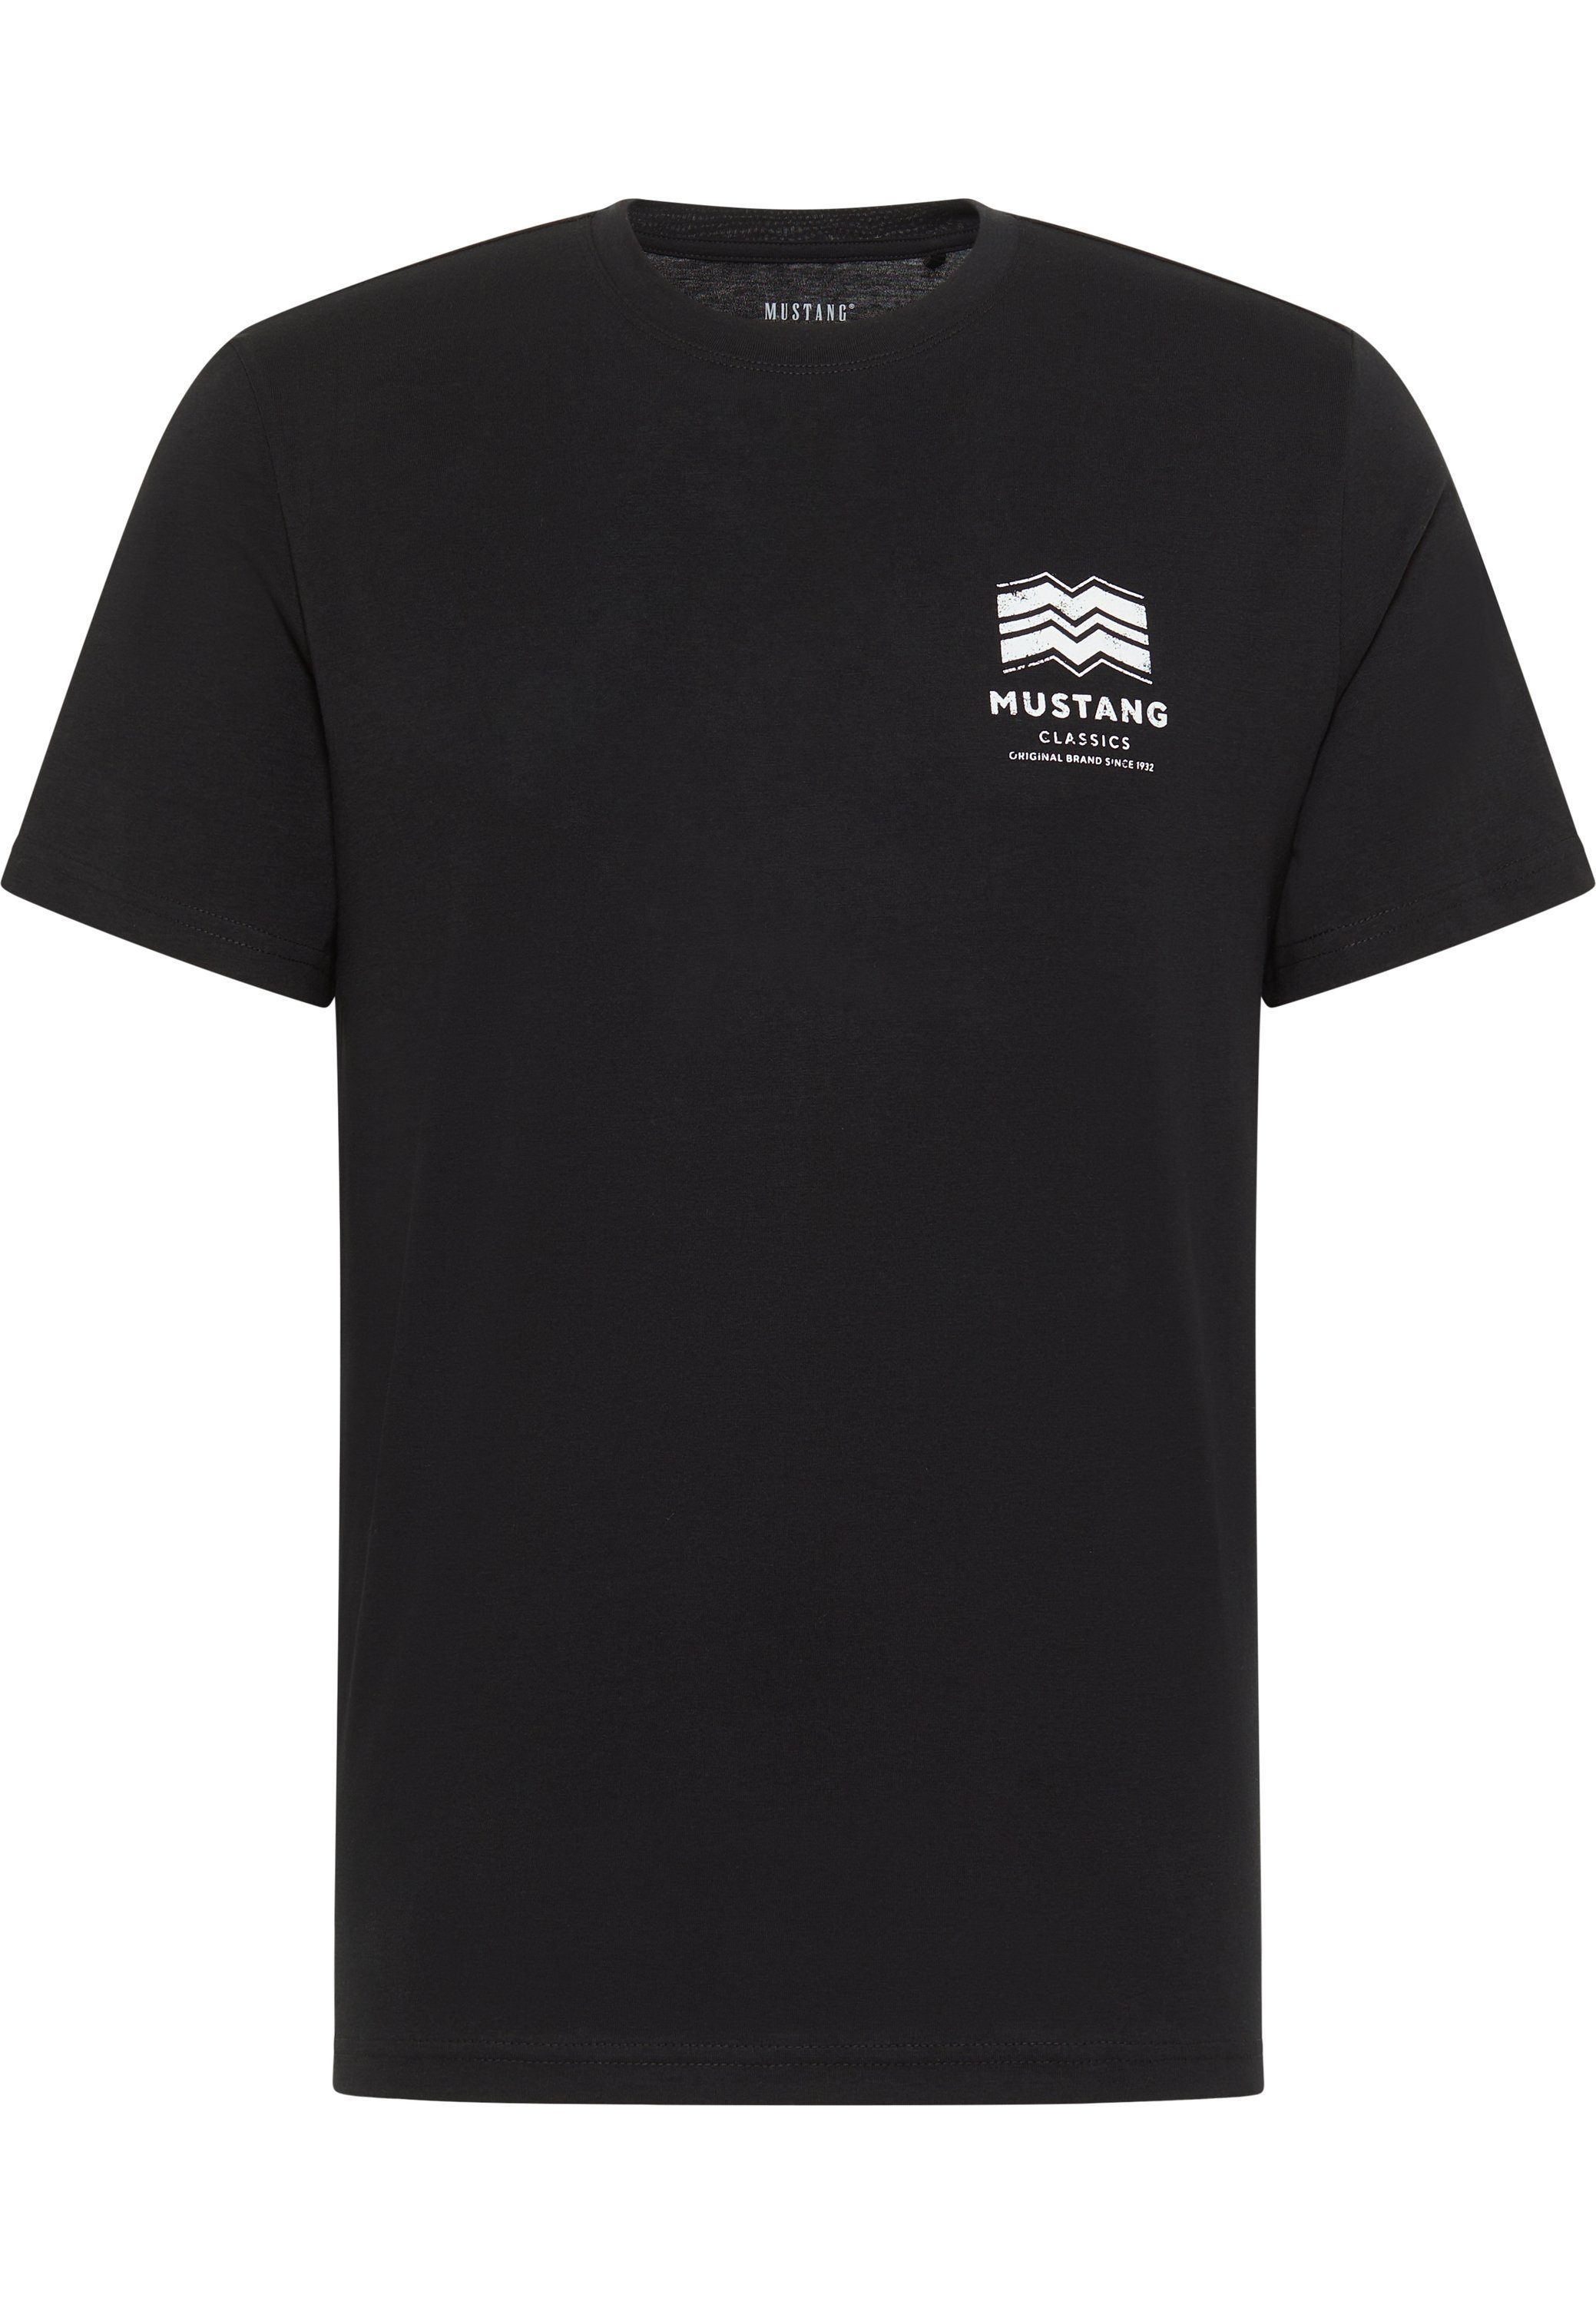 Mustang Kurzarmshirt schwarz T-Shirt MUSTANG